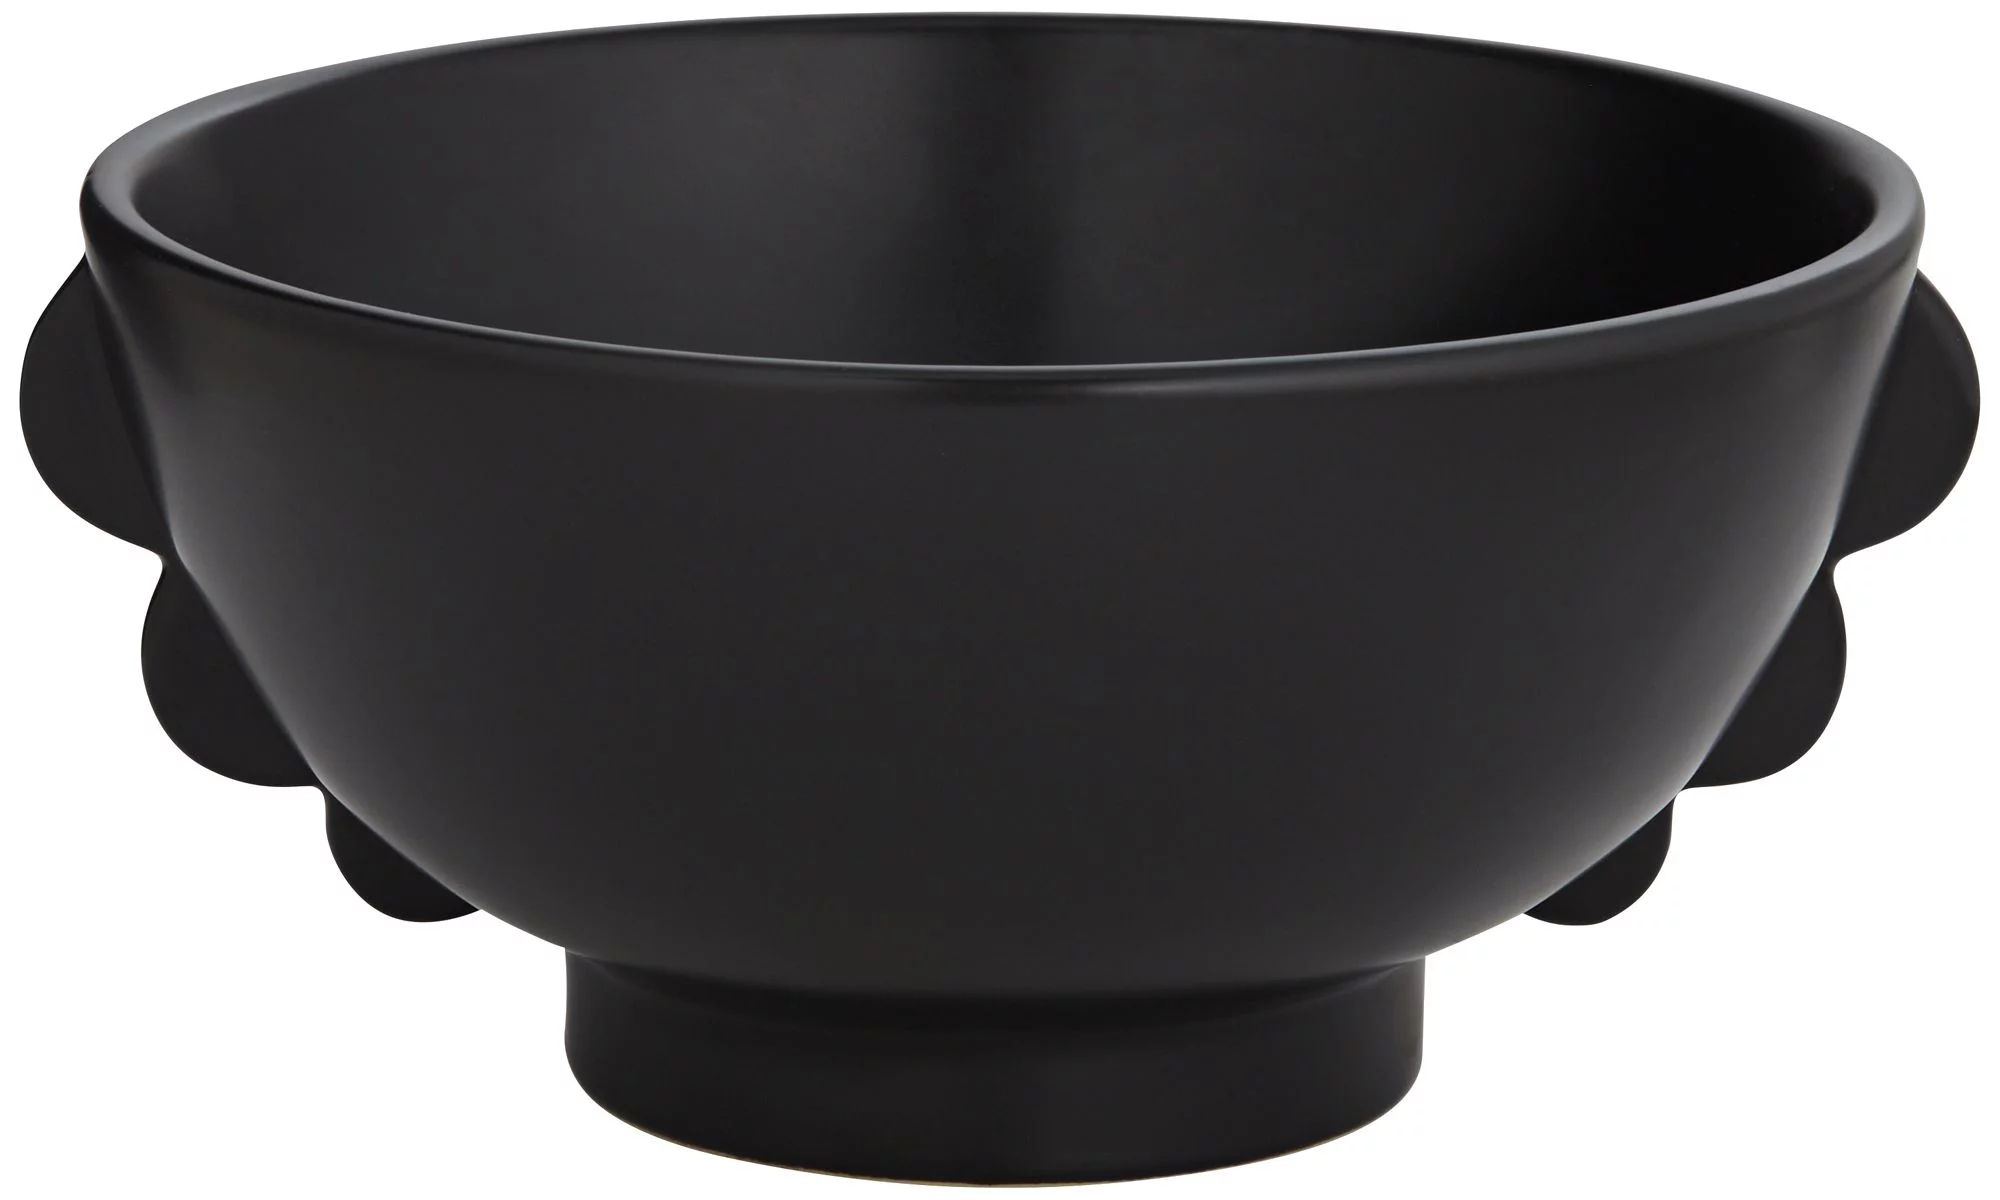 Studio 55D Vermosa Matte Black Ceramic Round Bowl | Walmart (US)